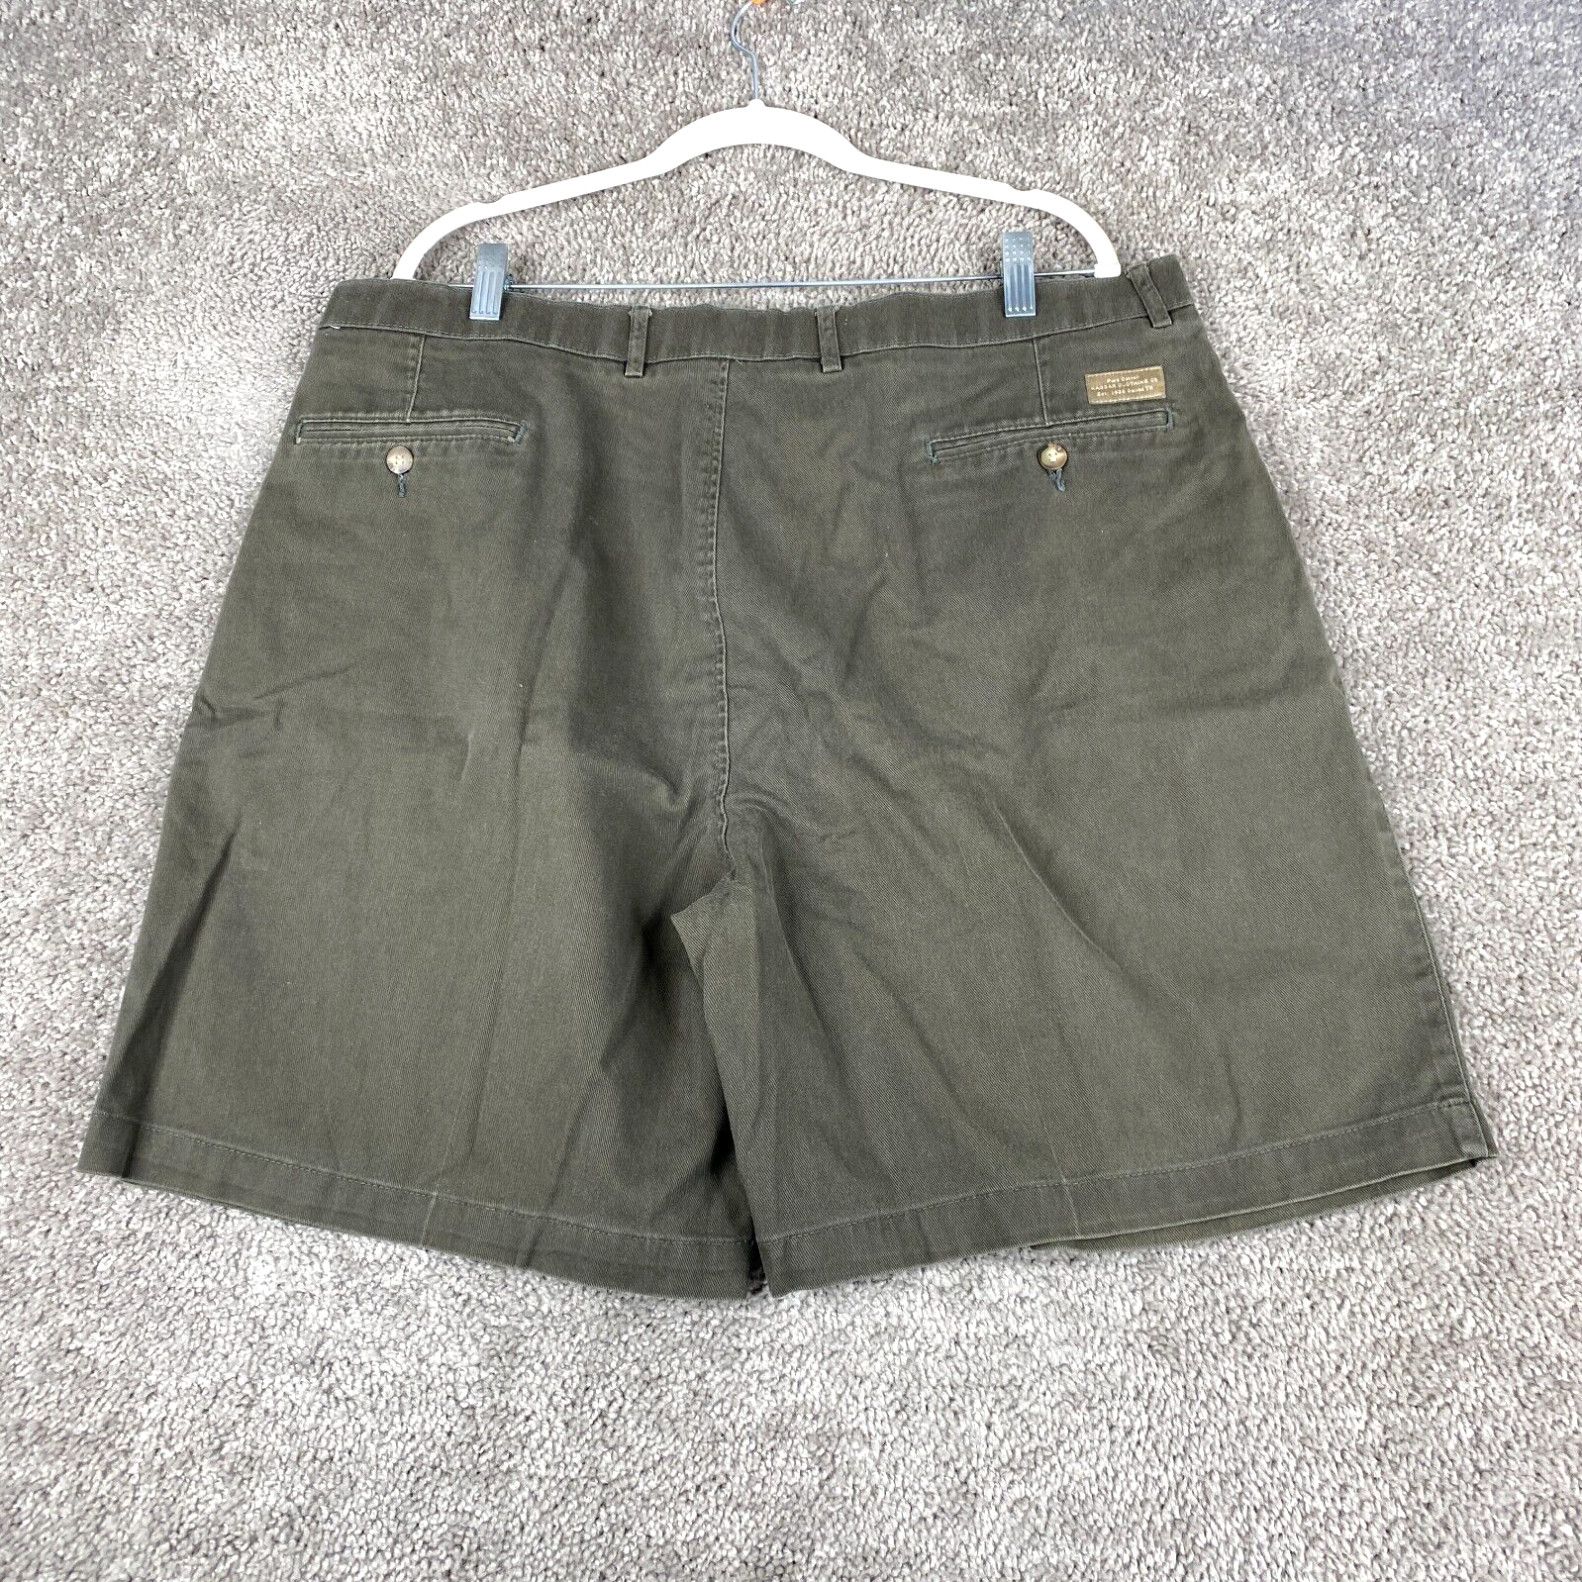 Haggar Haggar Clothing Co. Chino Shorts Men's Size 40 Green Pleated Front Pure Cotton Size US 40 / EU 56 - 3 Thumbnail